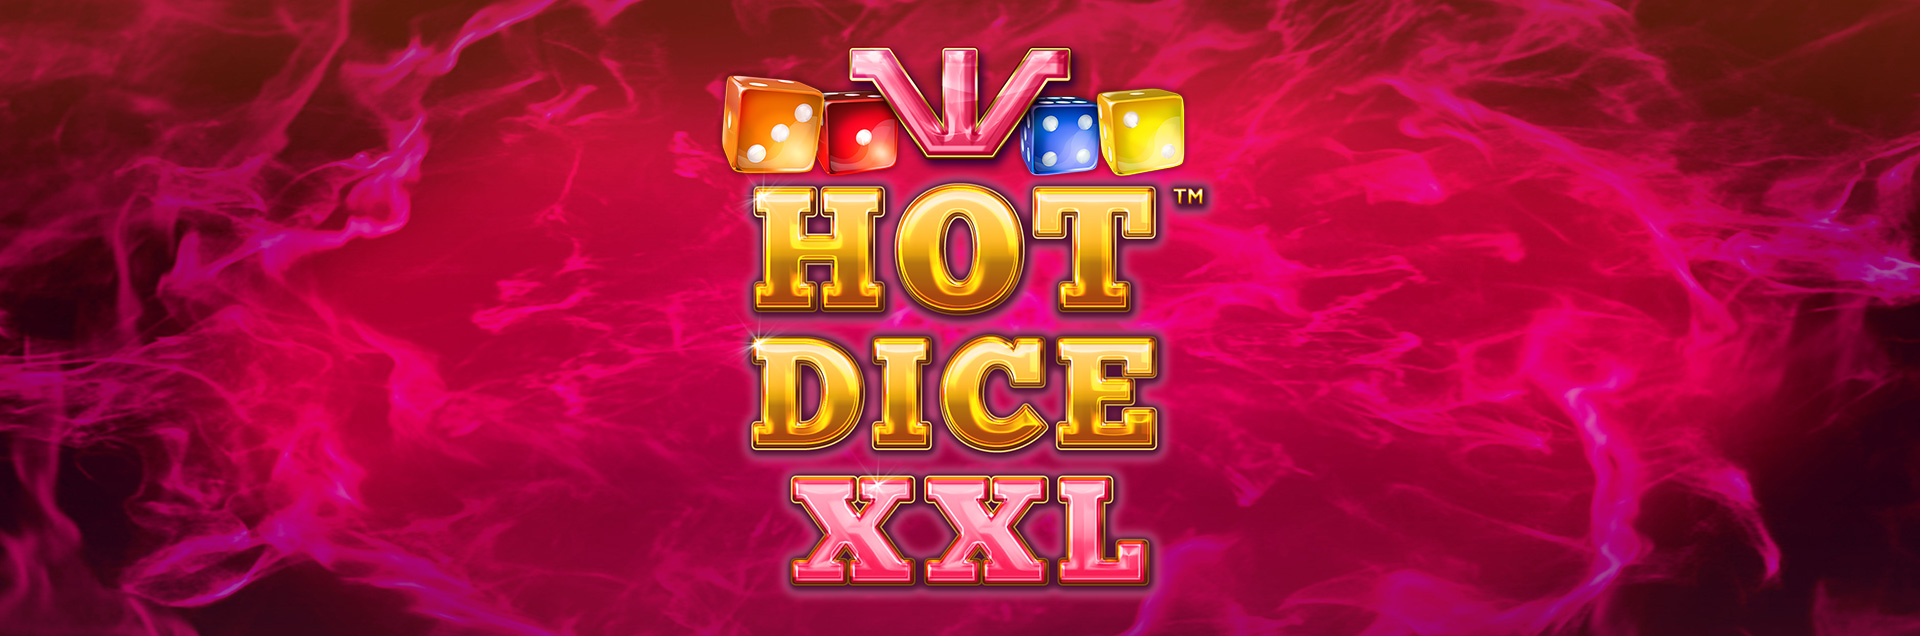 Hot Dice XXL header games